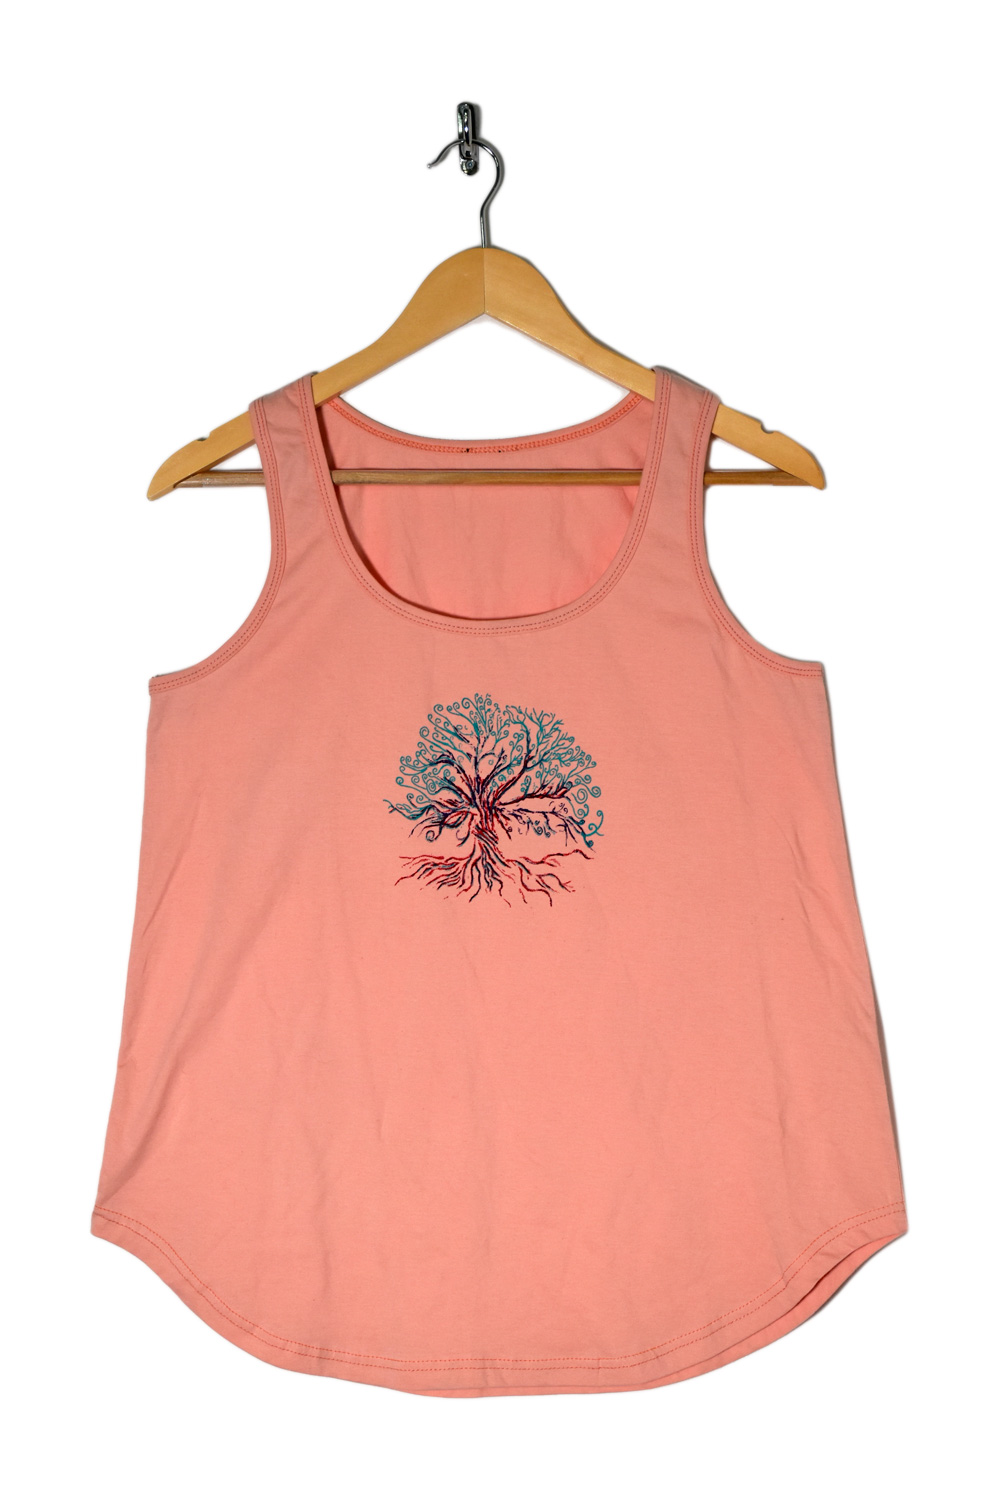 Peach sleeveless top with tree of life print